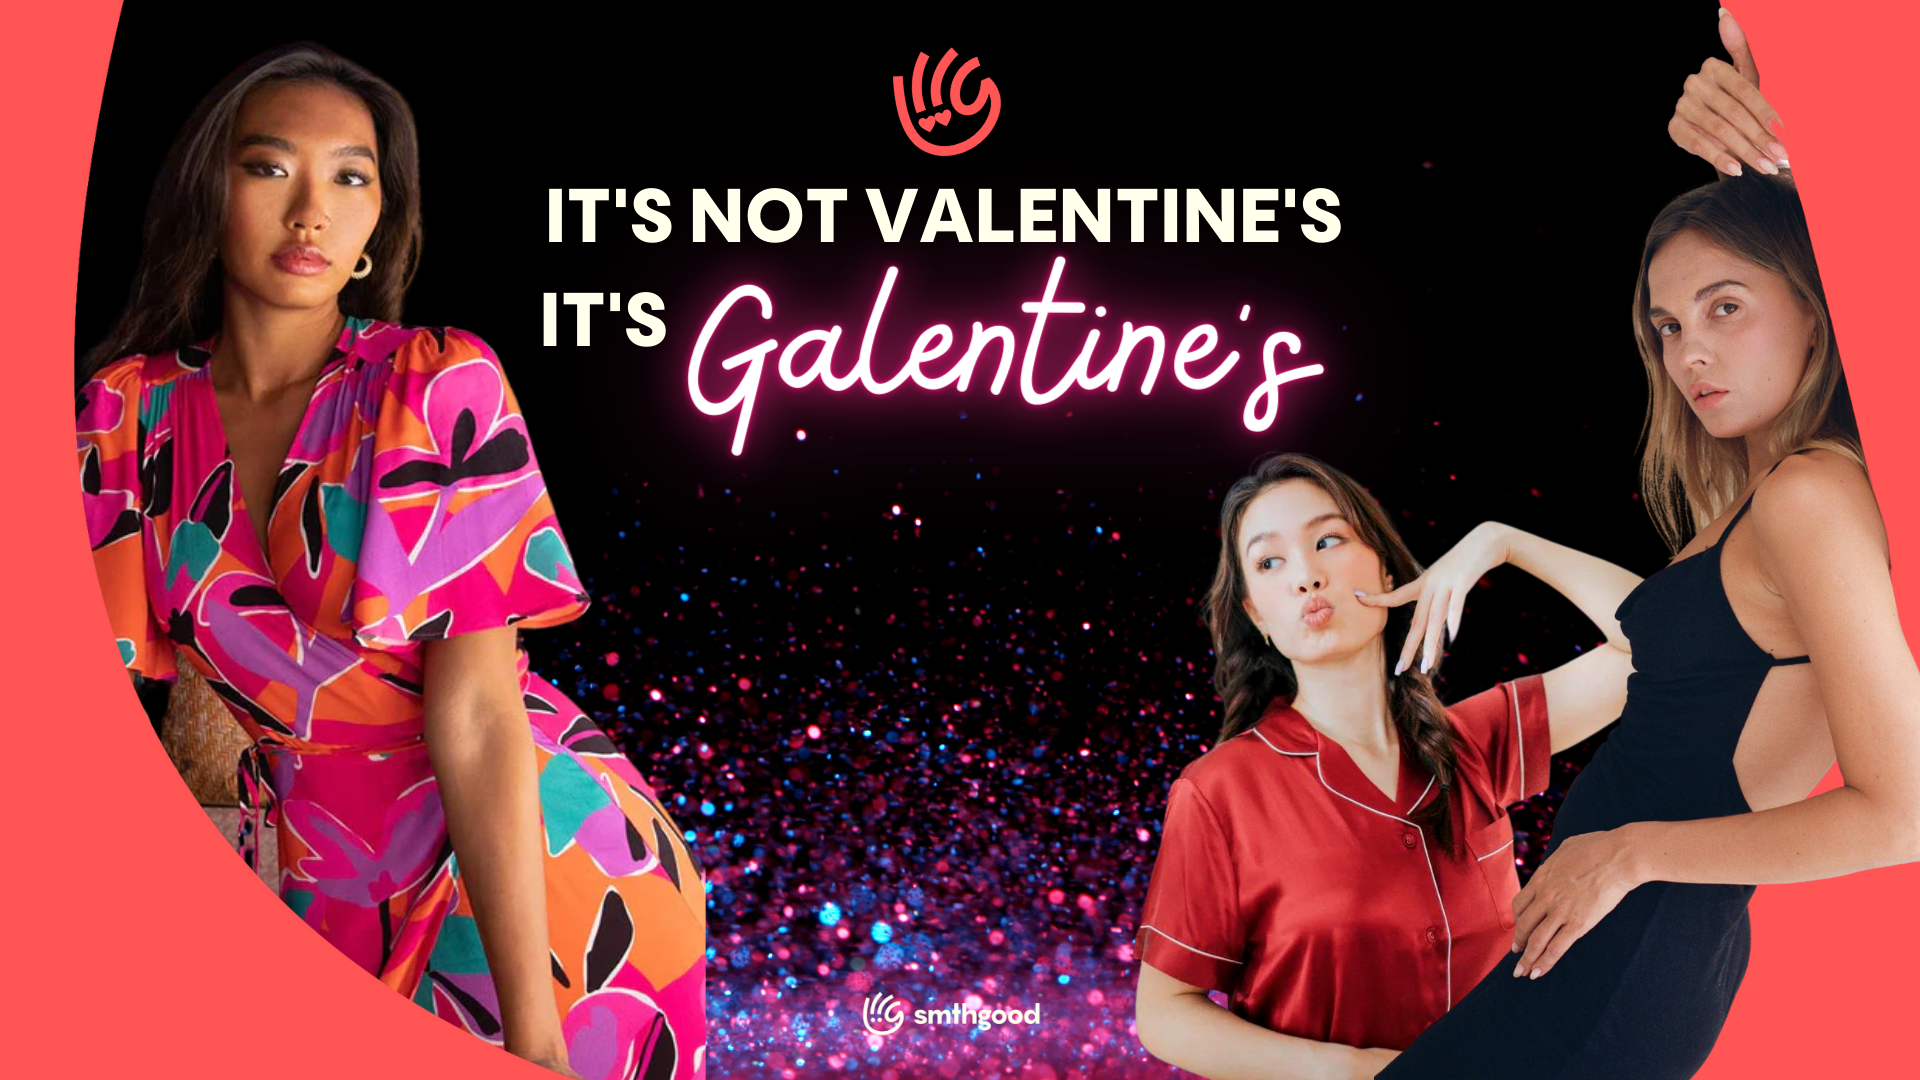 It’s not Valentine’s, it’s Galentine’s!